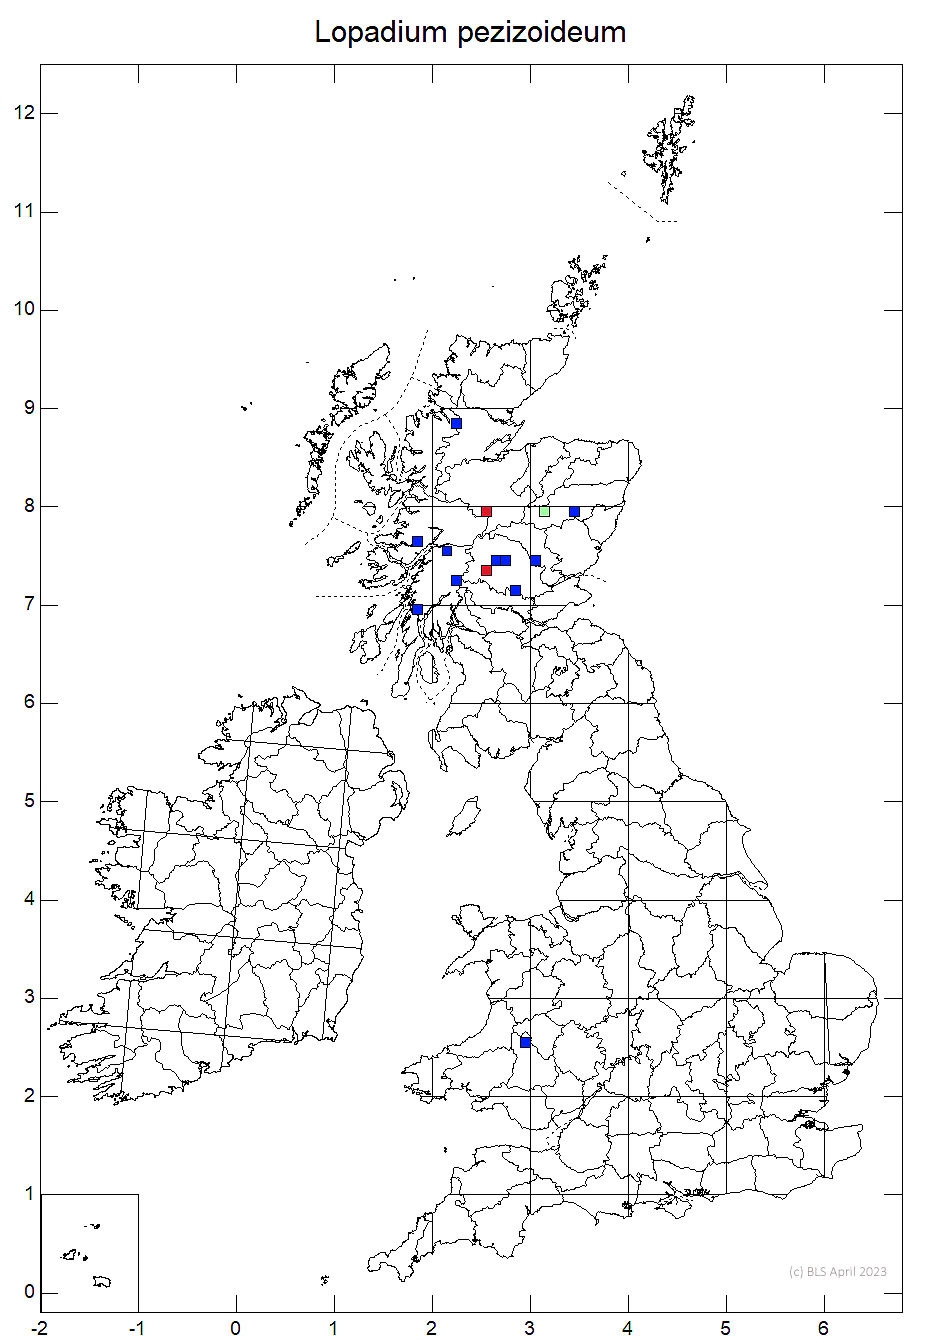 Lopadium pezizoideum 10km sq distribution map